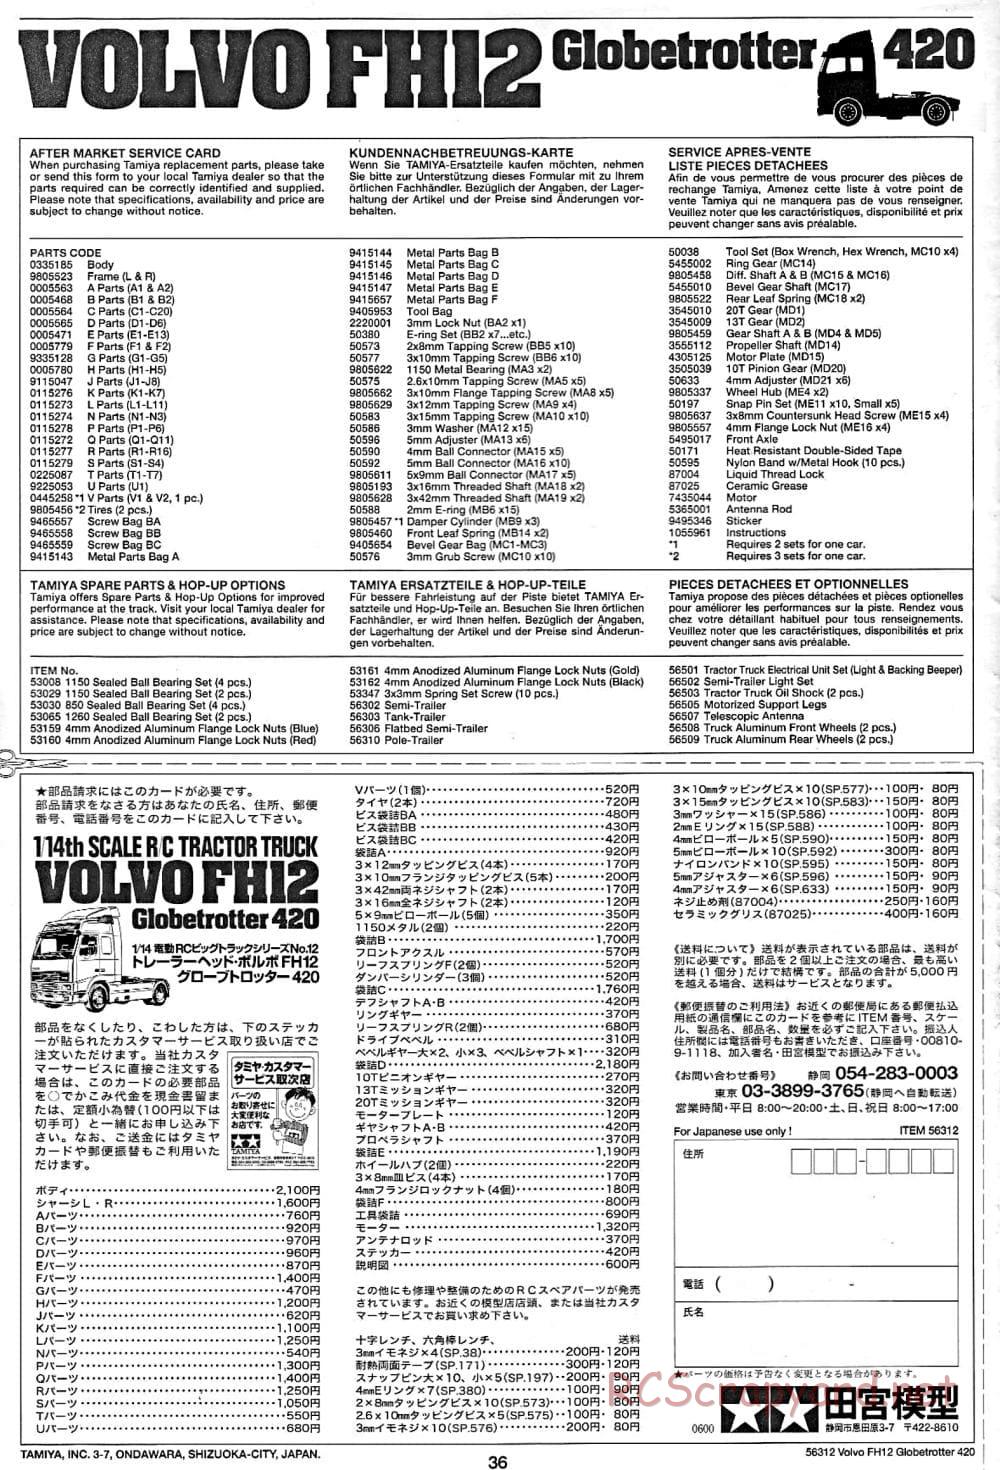 Tamiya - Volvo FH12 Globetrotter 420 - Manual - Page 36